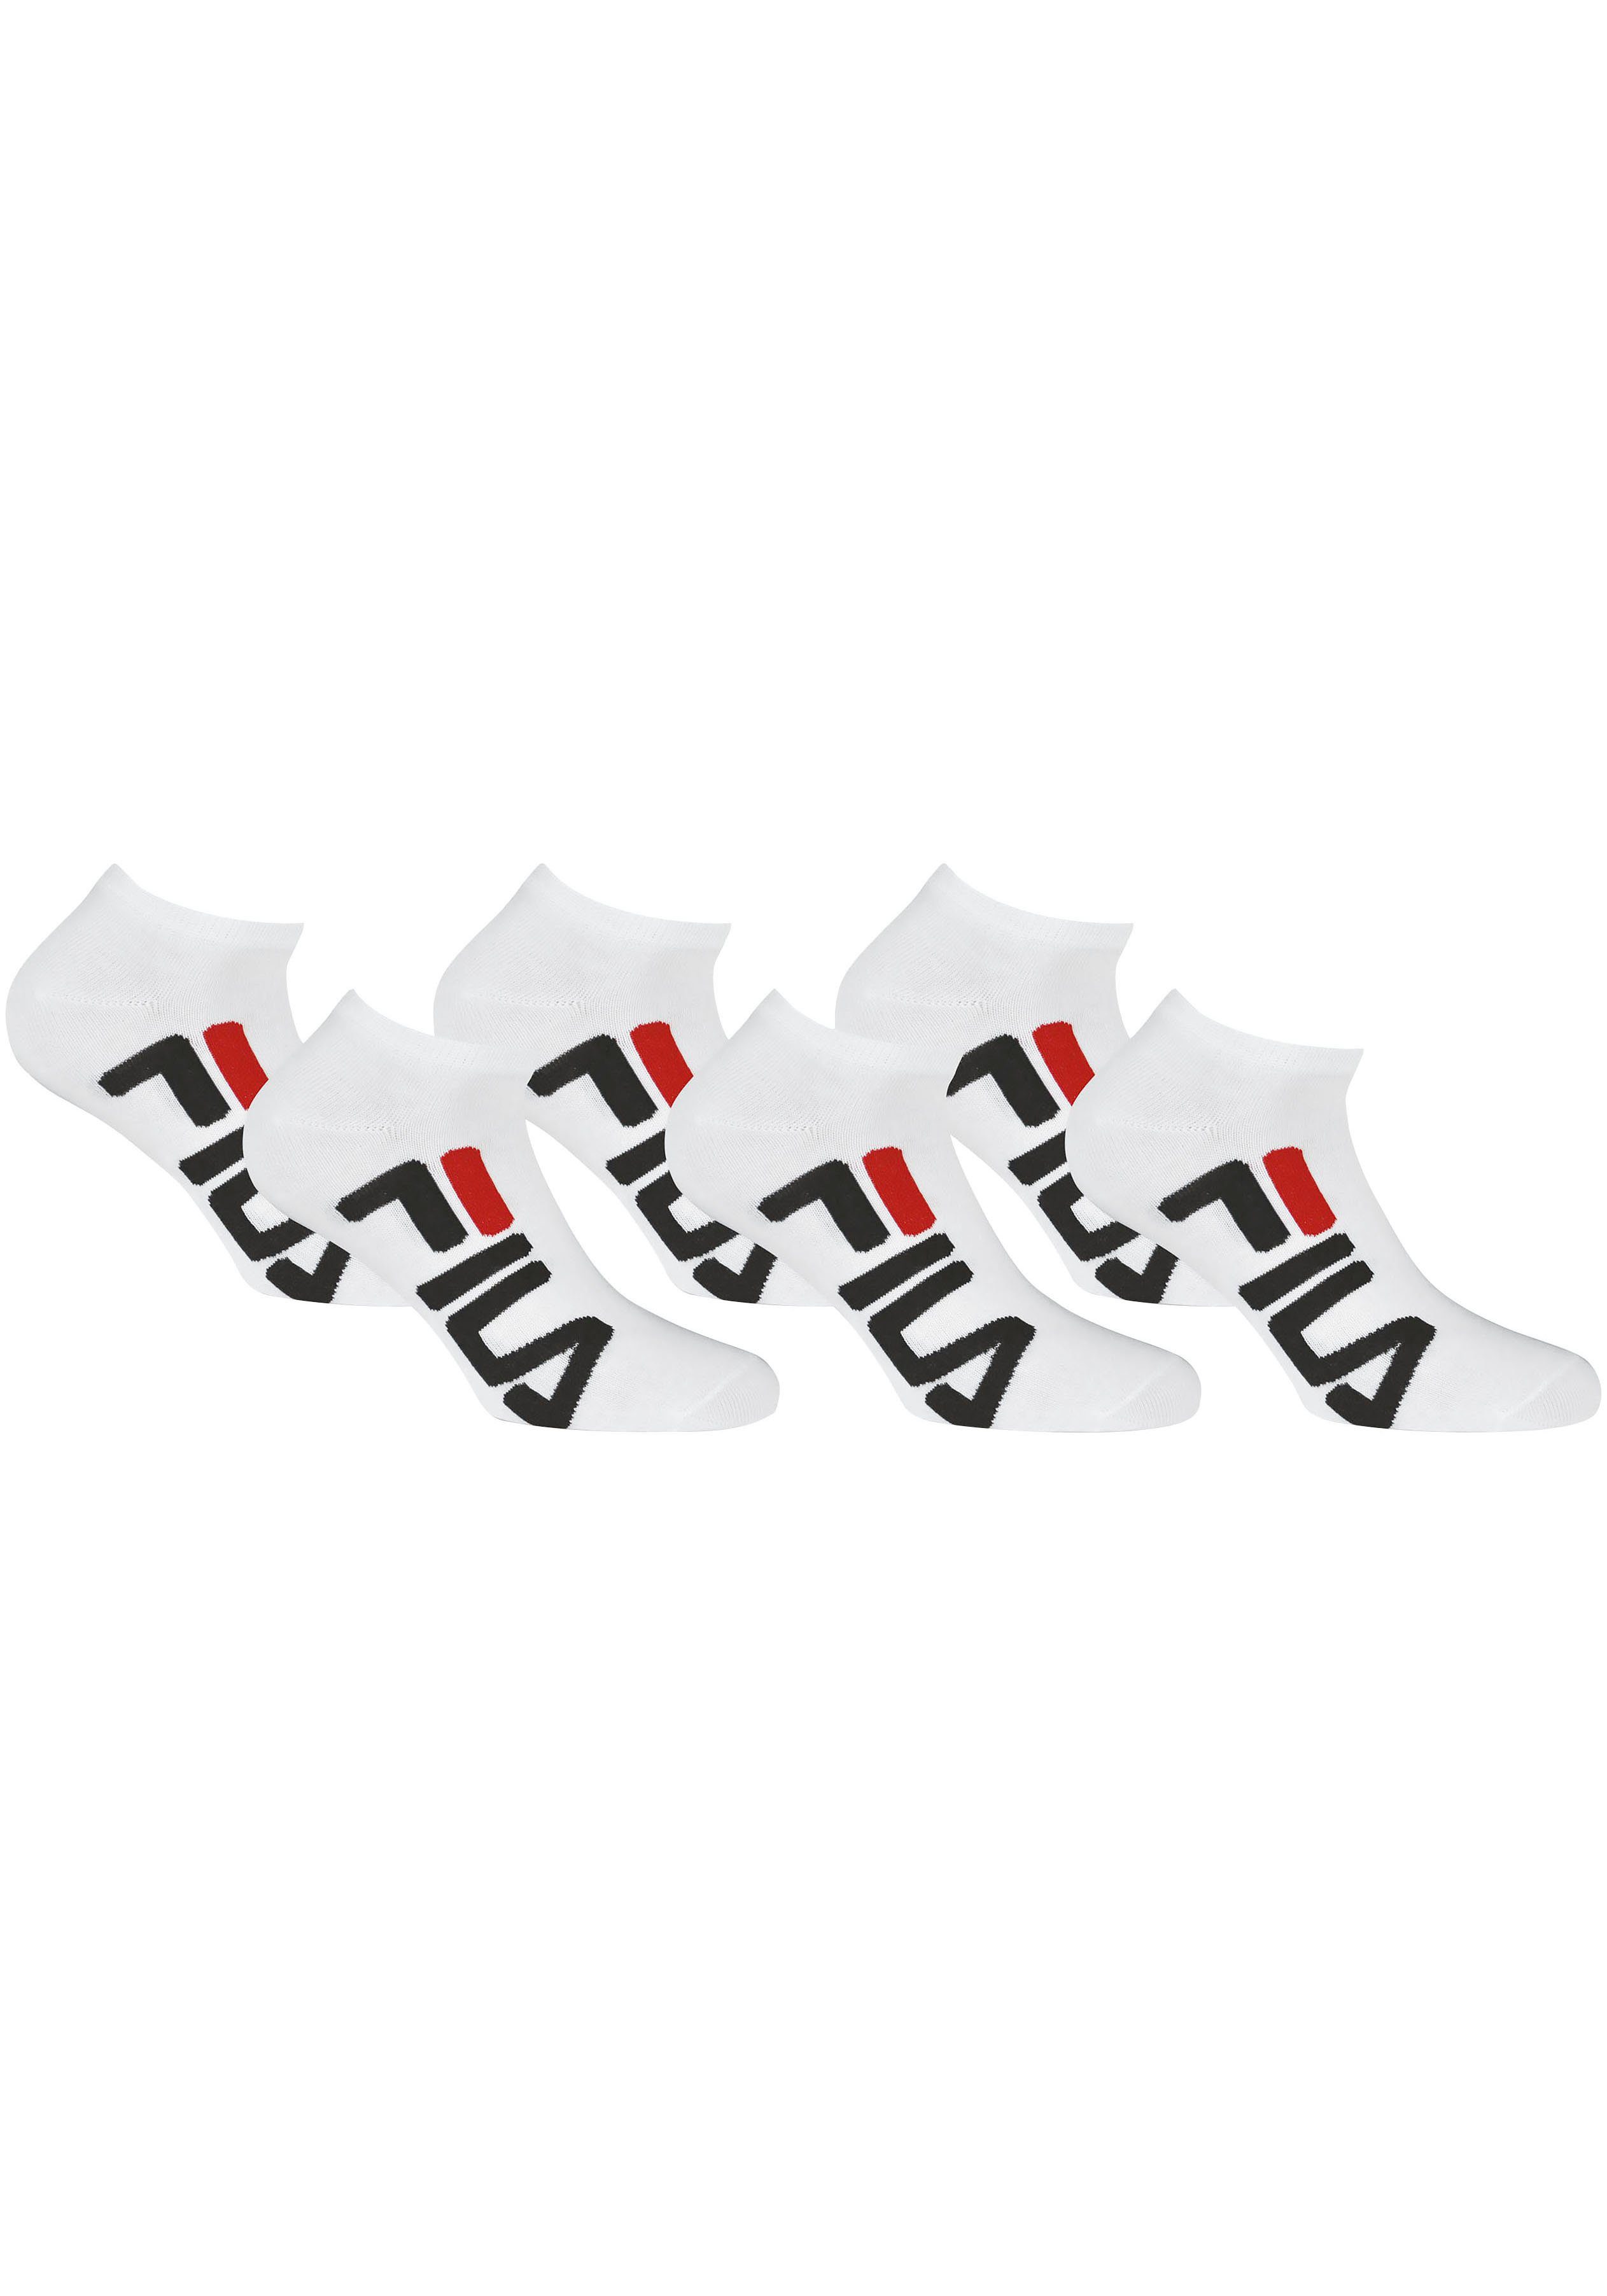 Großer Fila Sneakersocken 6-Paar) white Markenschriftzug seitlich (Packung,